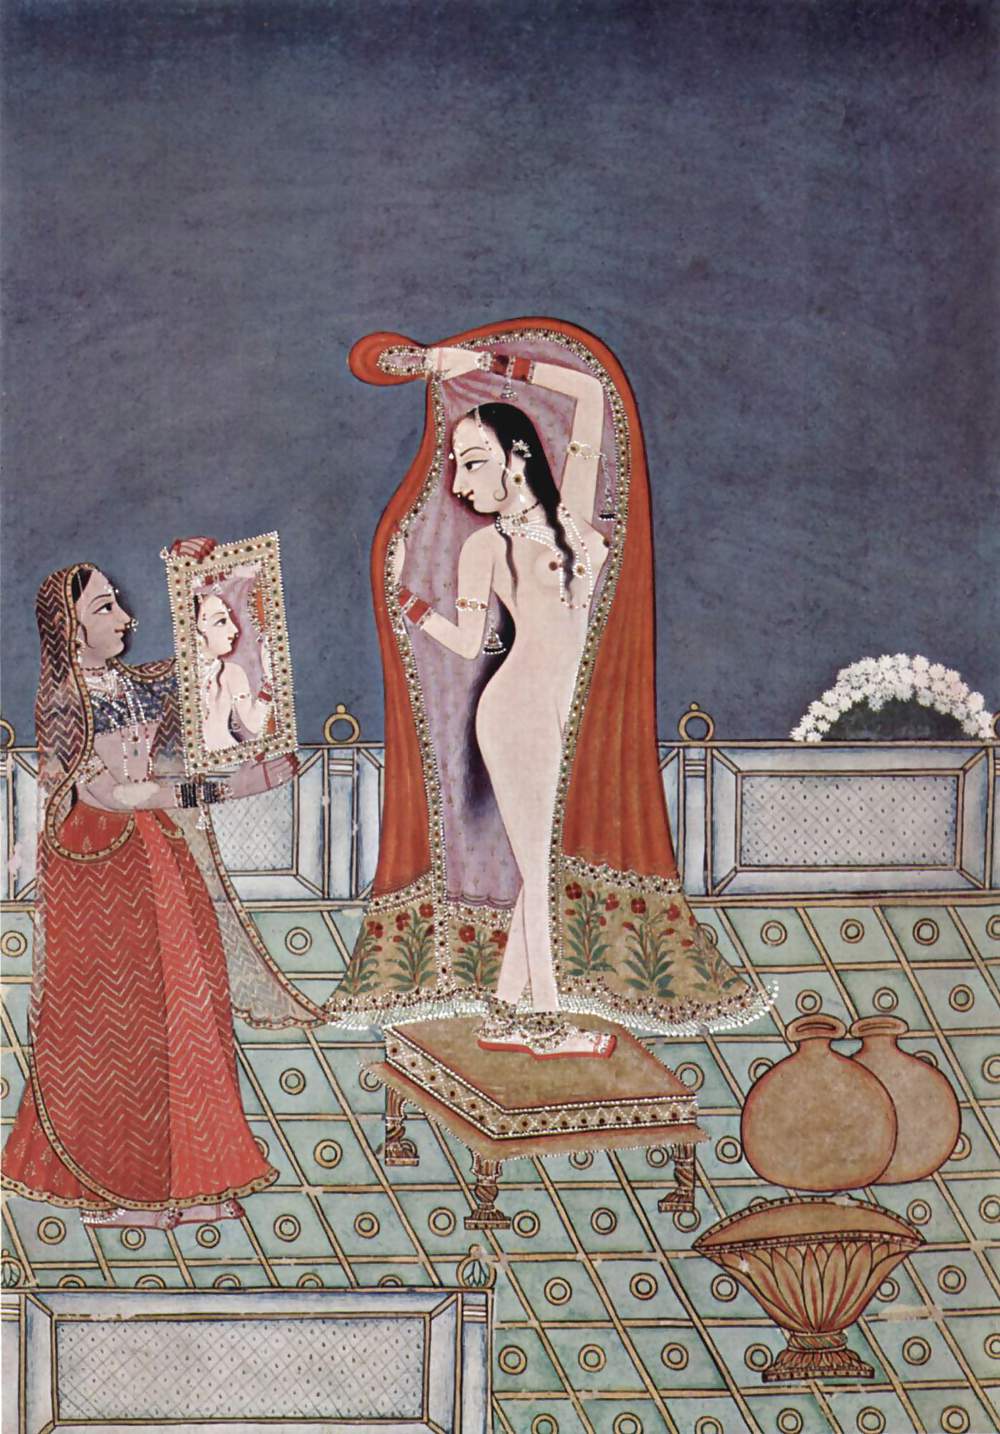 Drawn Ero and Porn Art 1 - Indian Miniatures Mughal Period #5489451